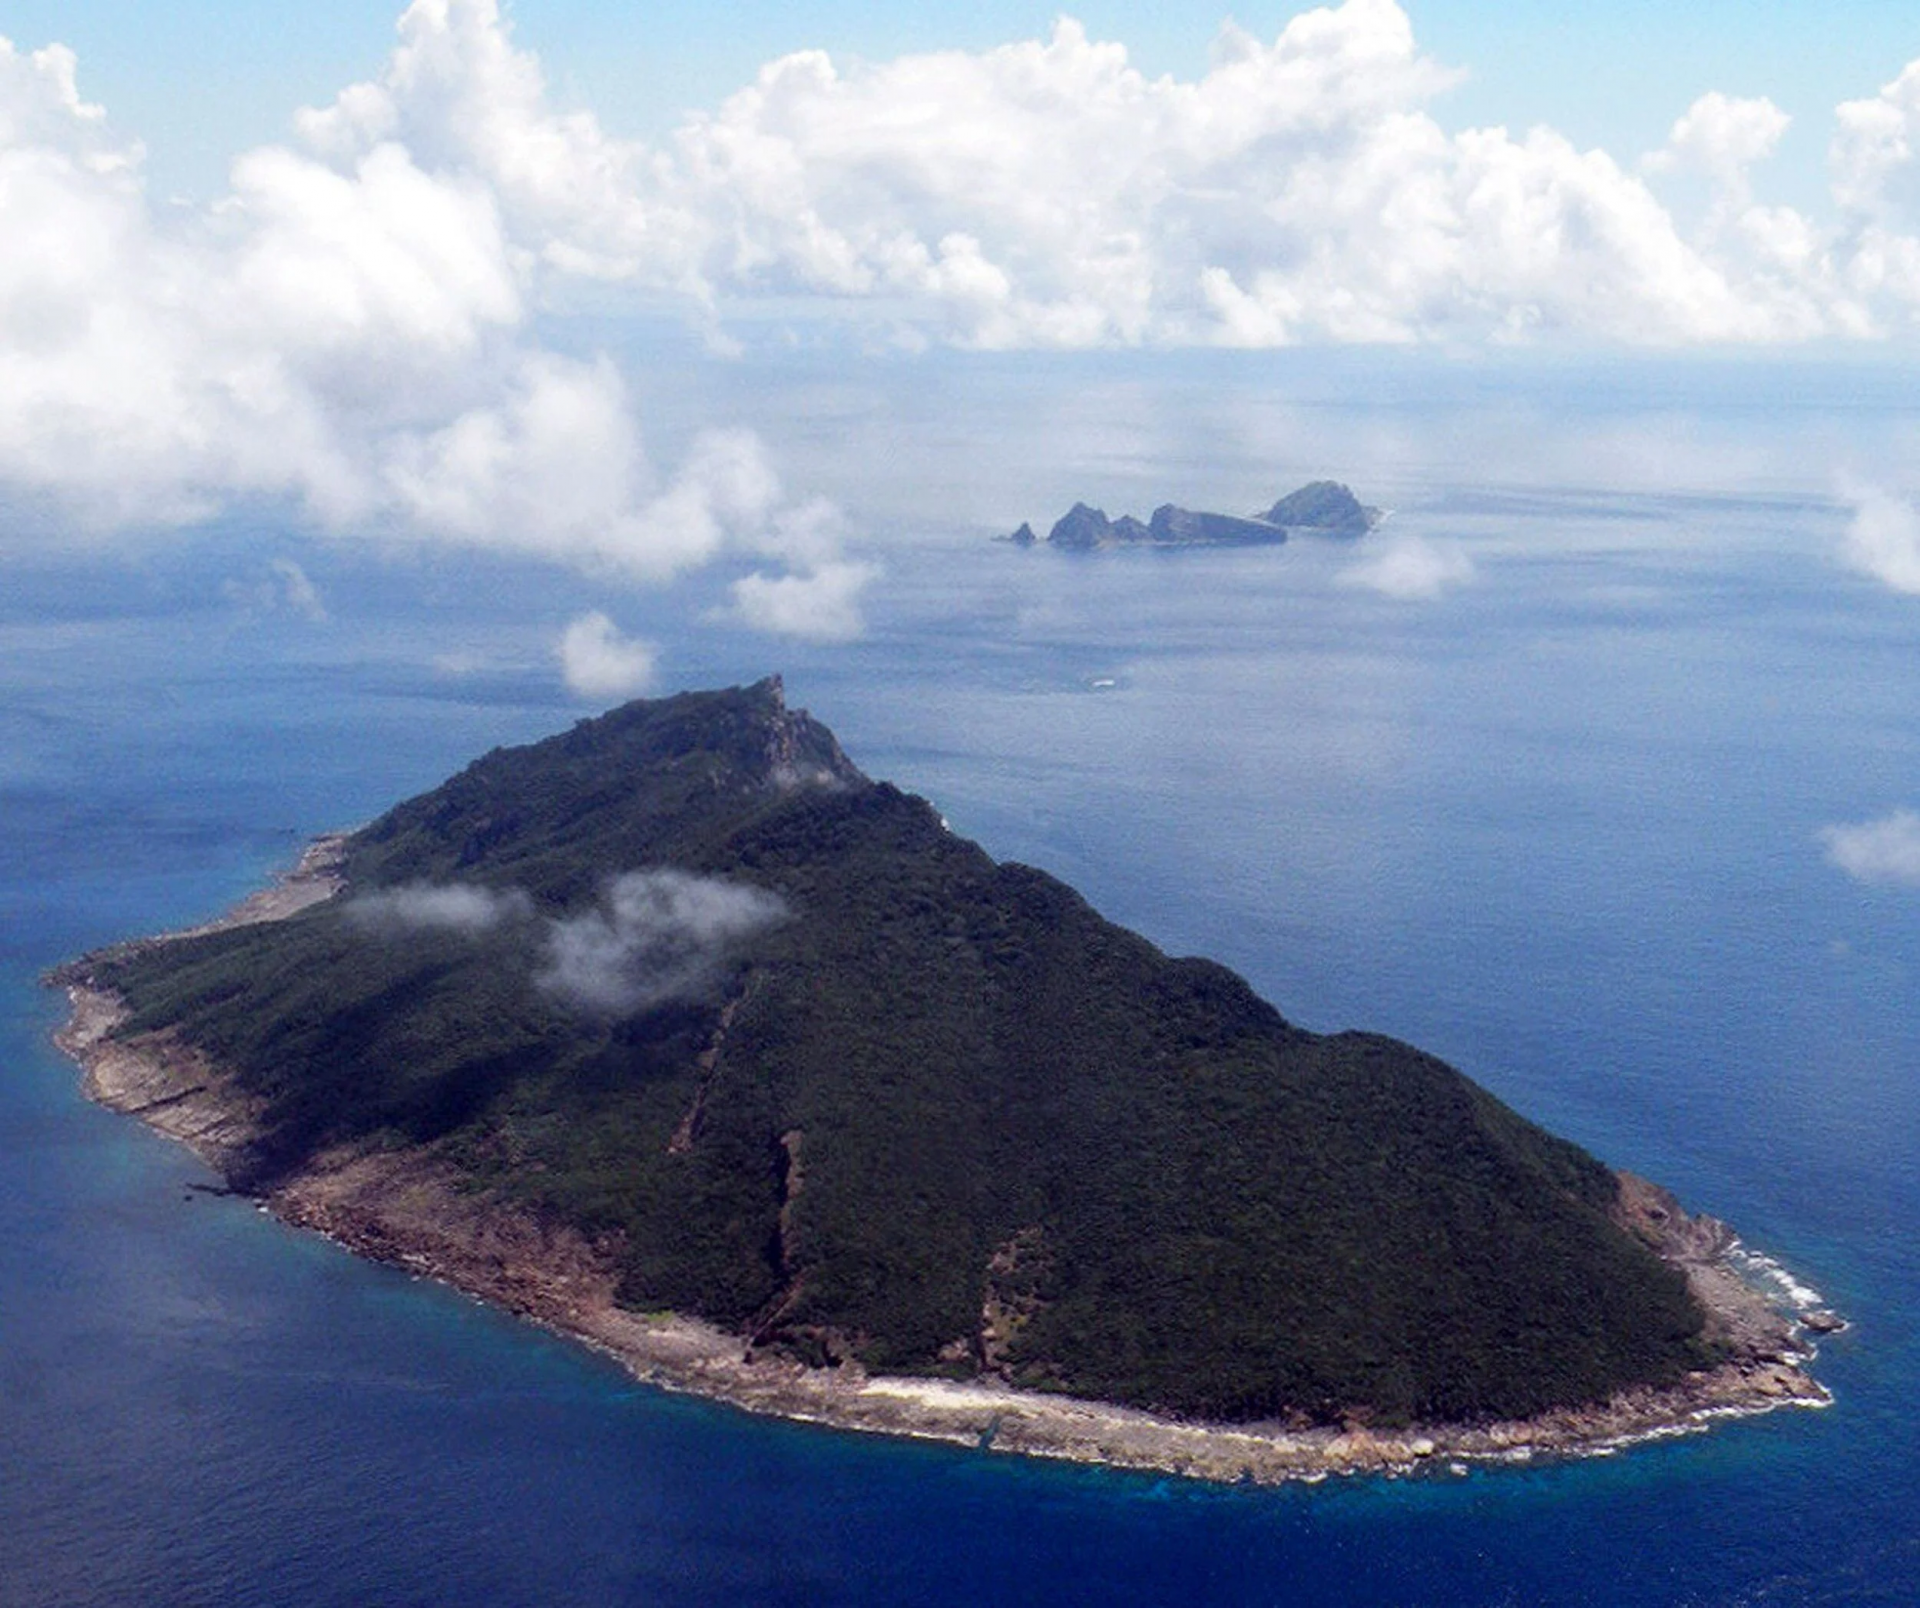 East China Sea: Japan asks China to take down digital museum on disputed island